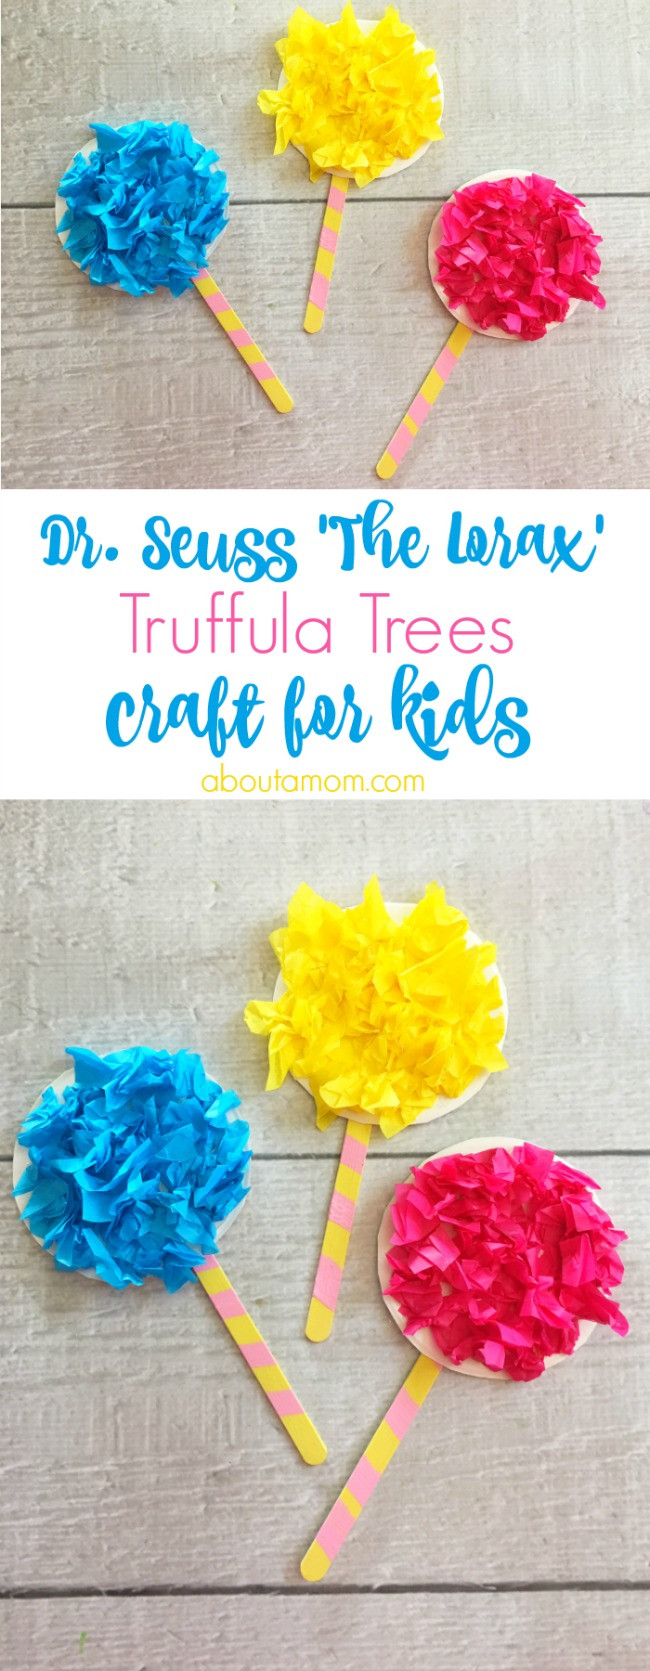 Dr Seuss Craft Ideas For Preschoolers
 The 11 Best Dr Seuss Crafts for Kids